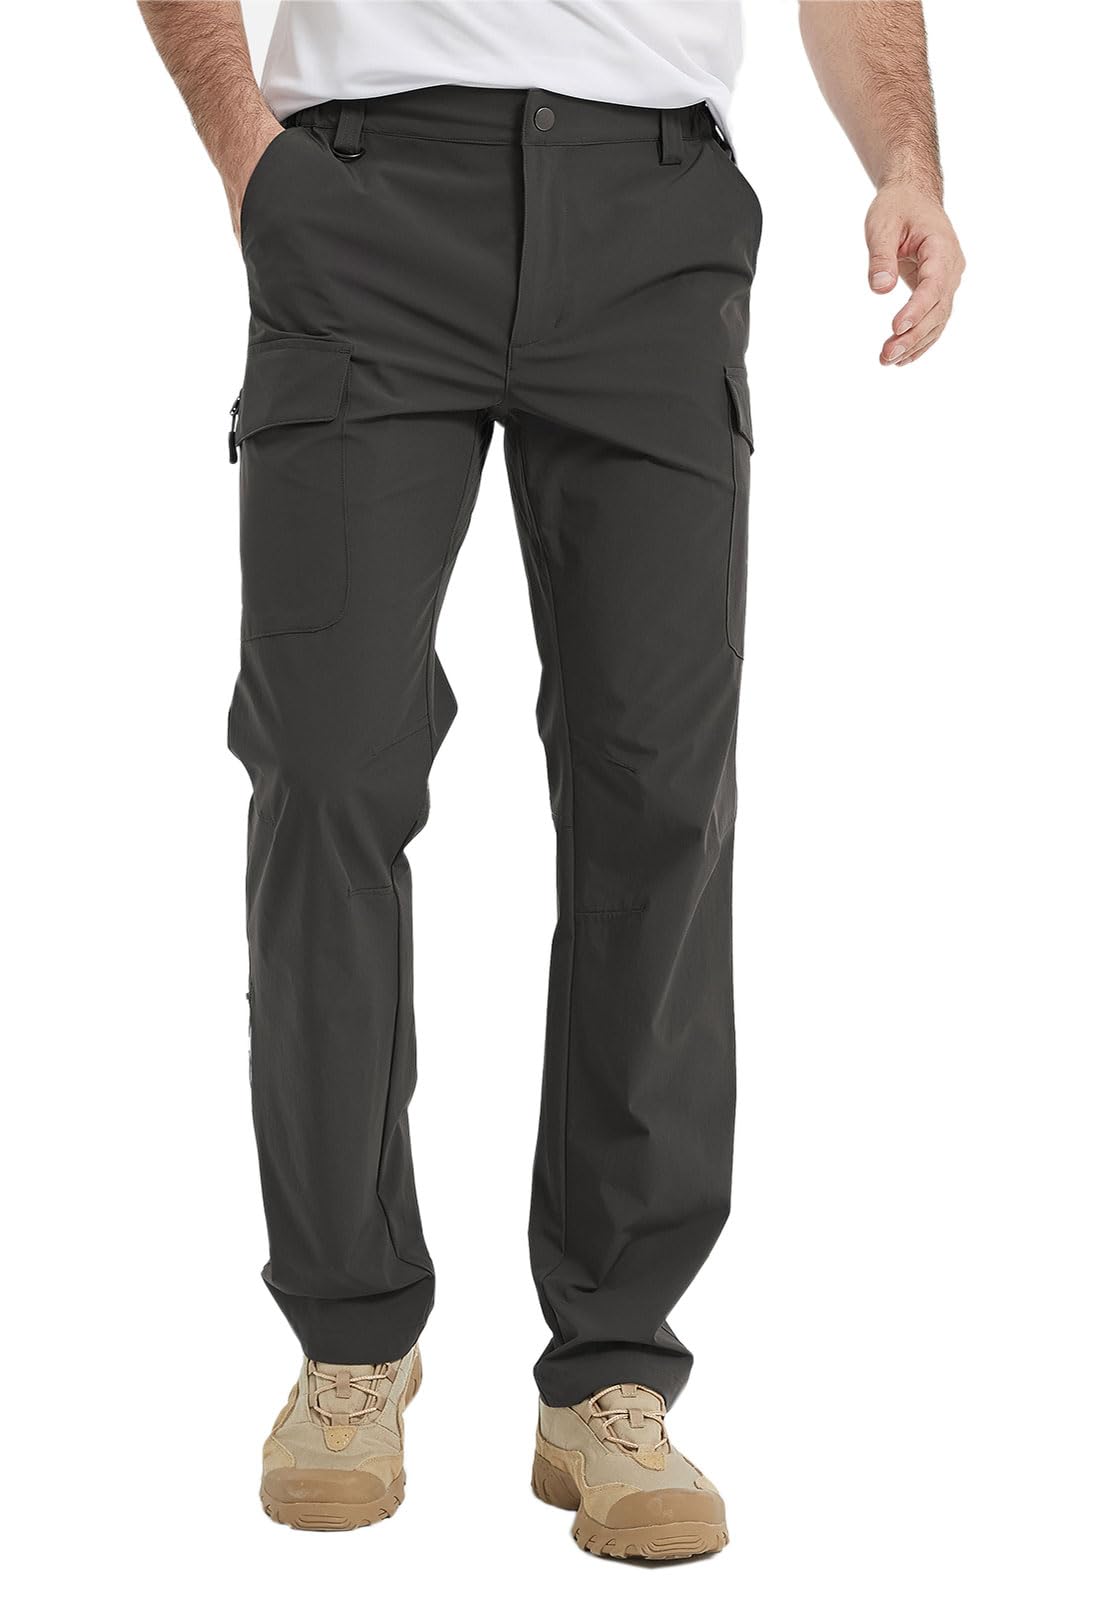 Men's Cargo Hiking Pants Waterproof Lightweight Quick Dry Utility 7 Po